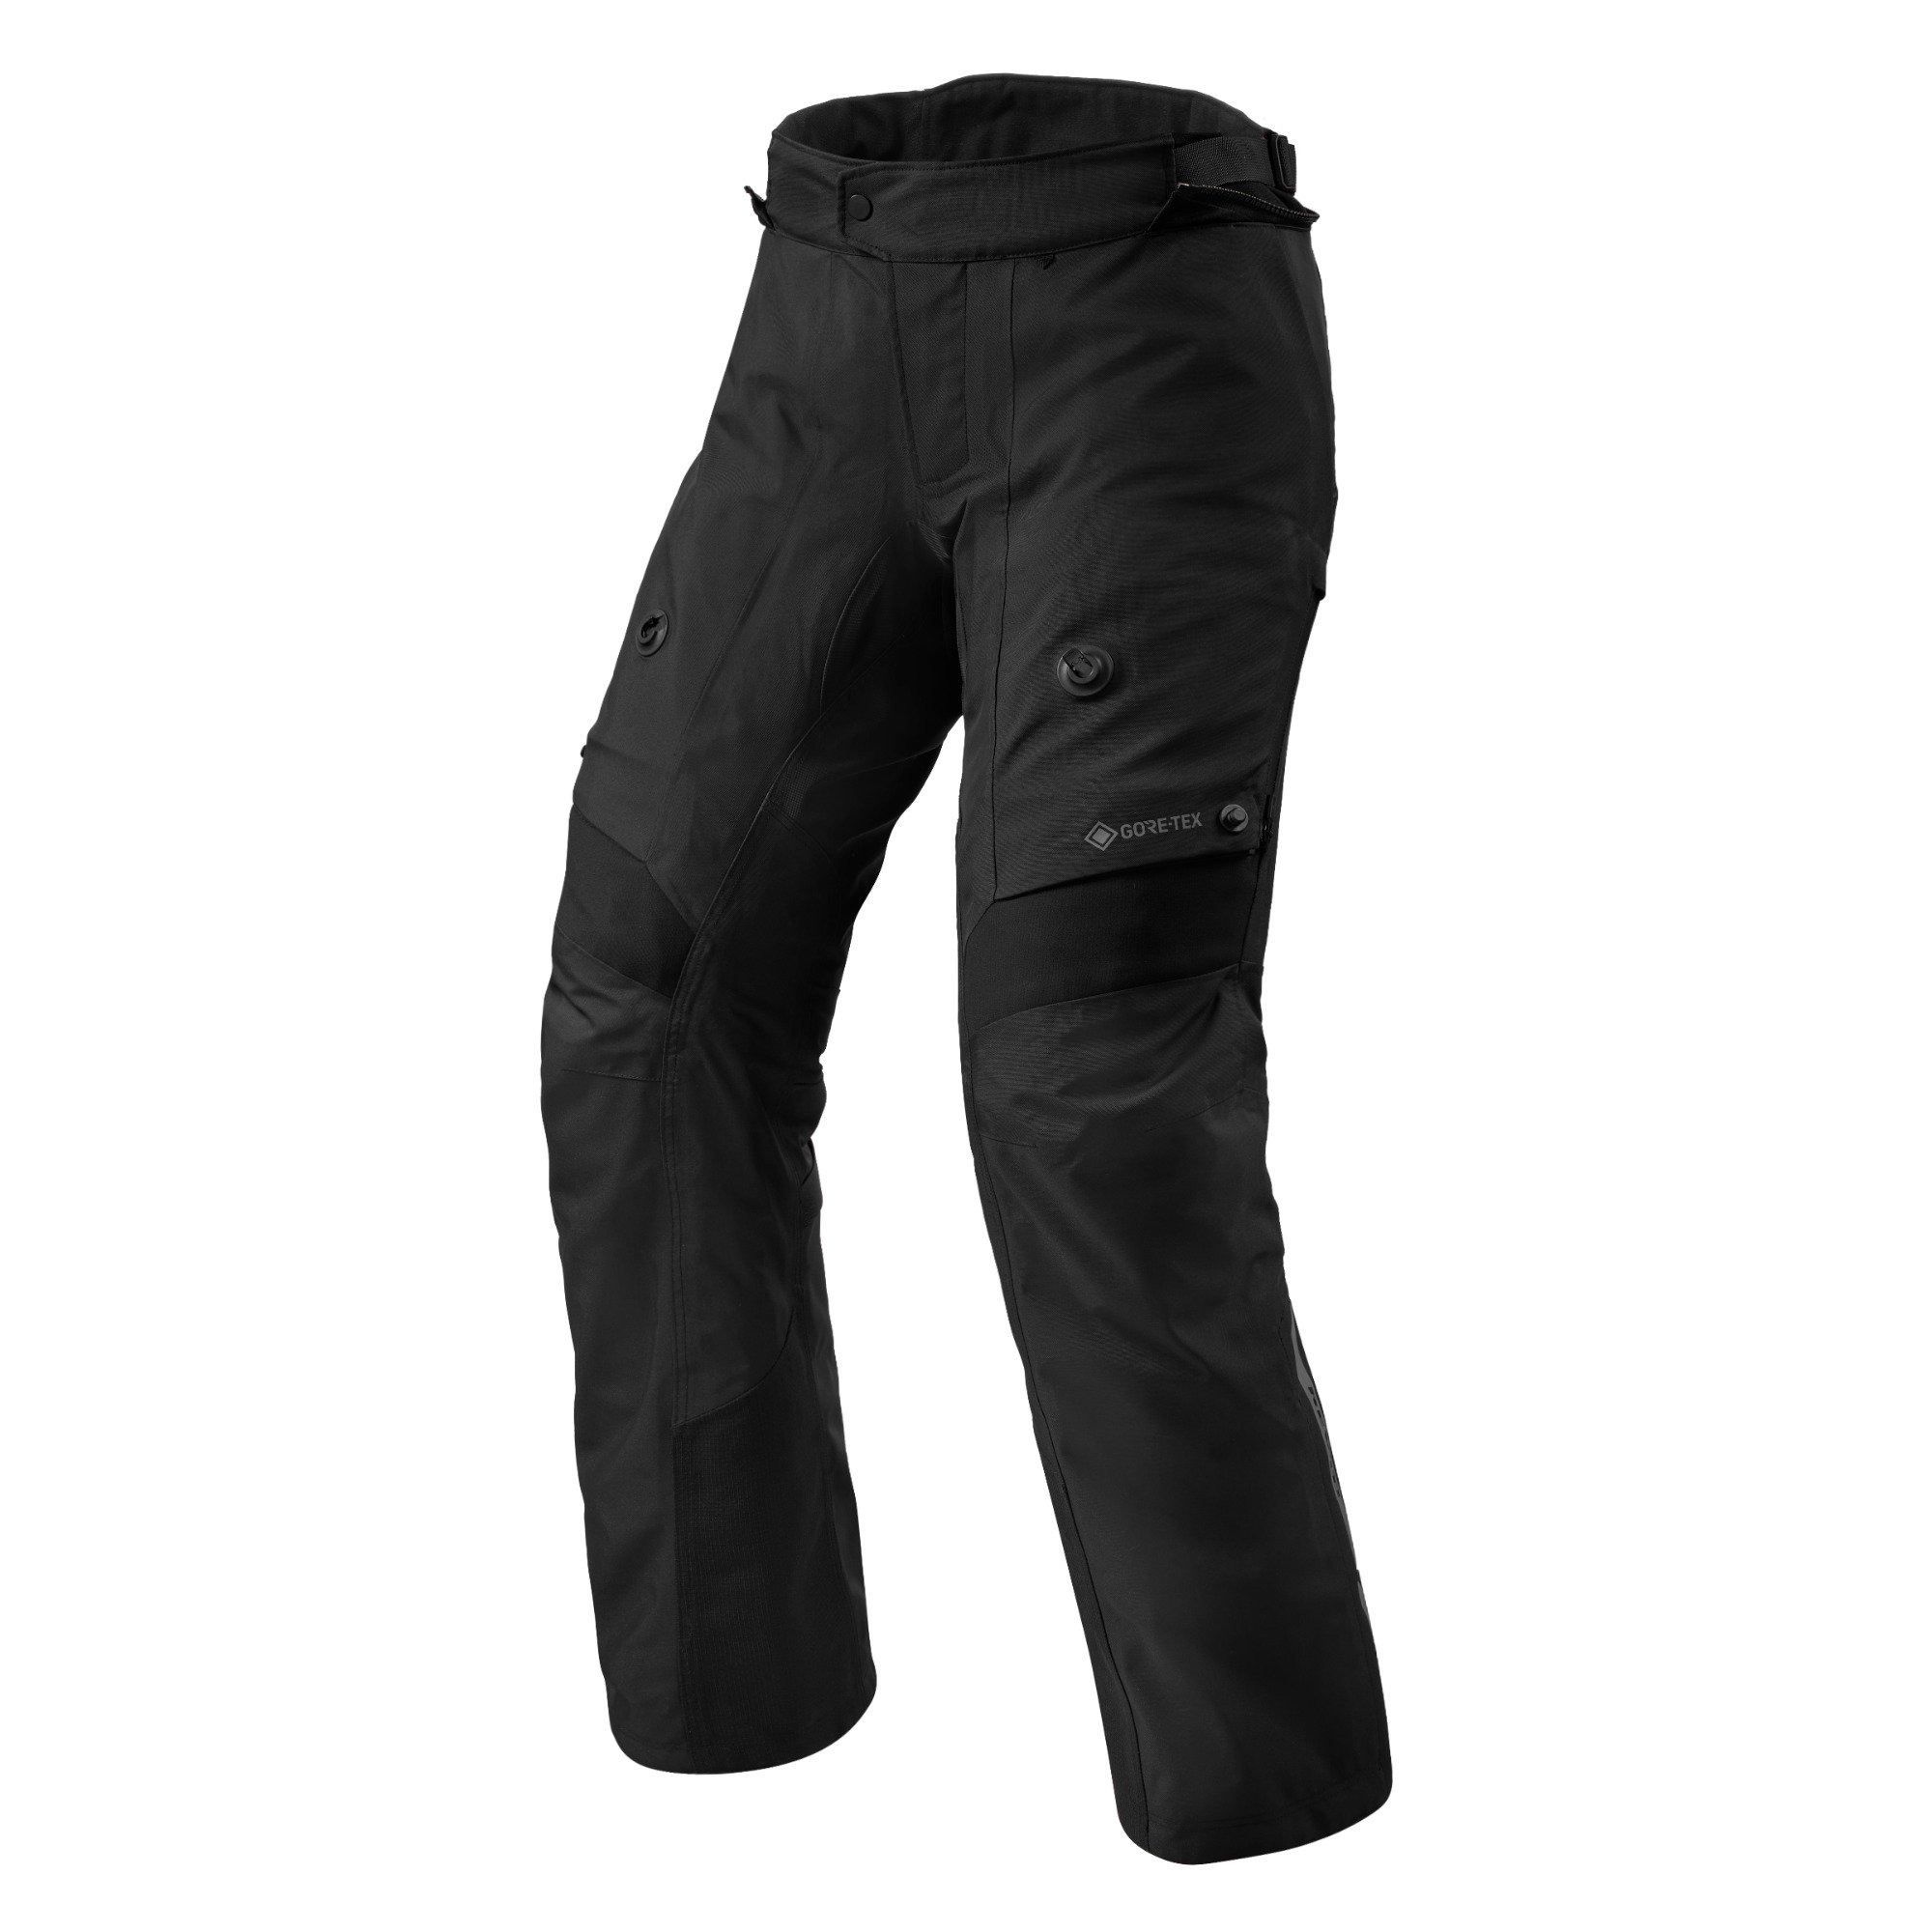 Image of REV'IT! Pants Poseidon 3 GTX Black Short Motorcycle Pants Size L EN